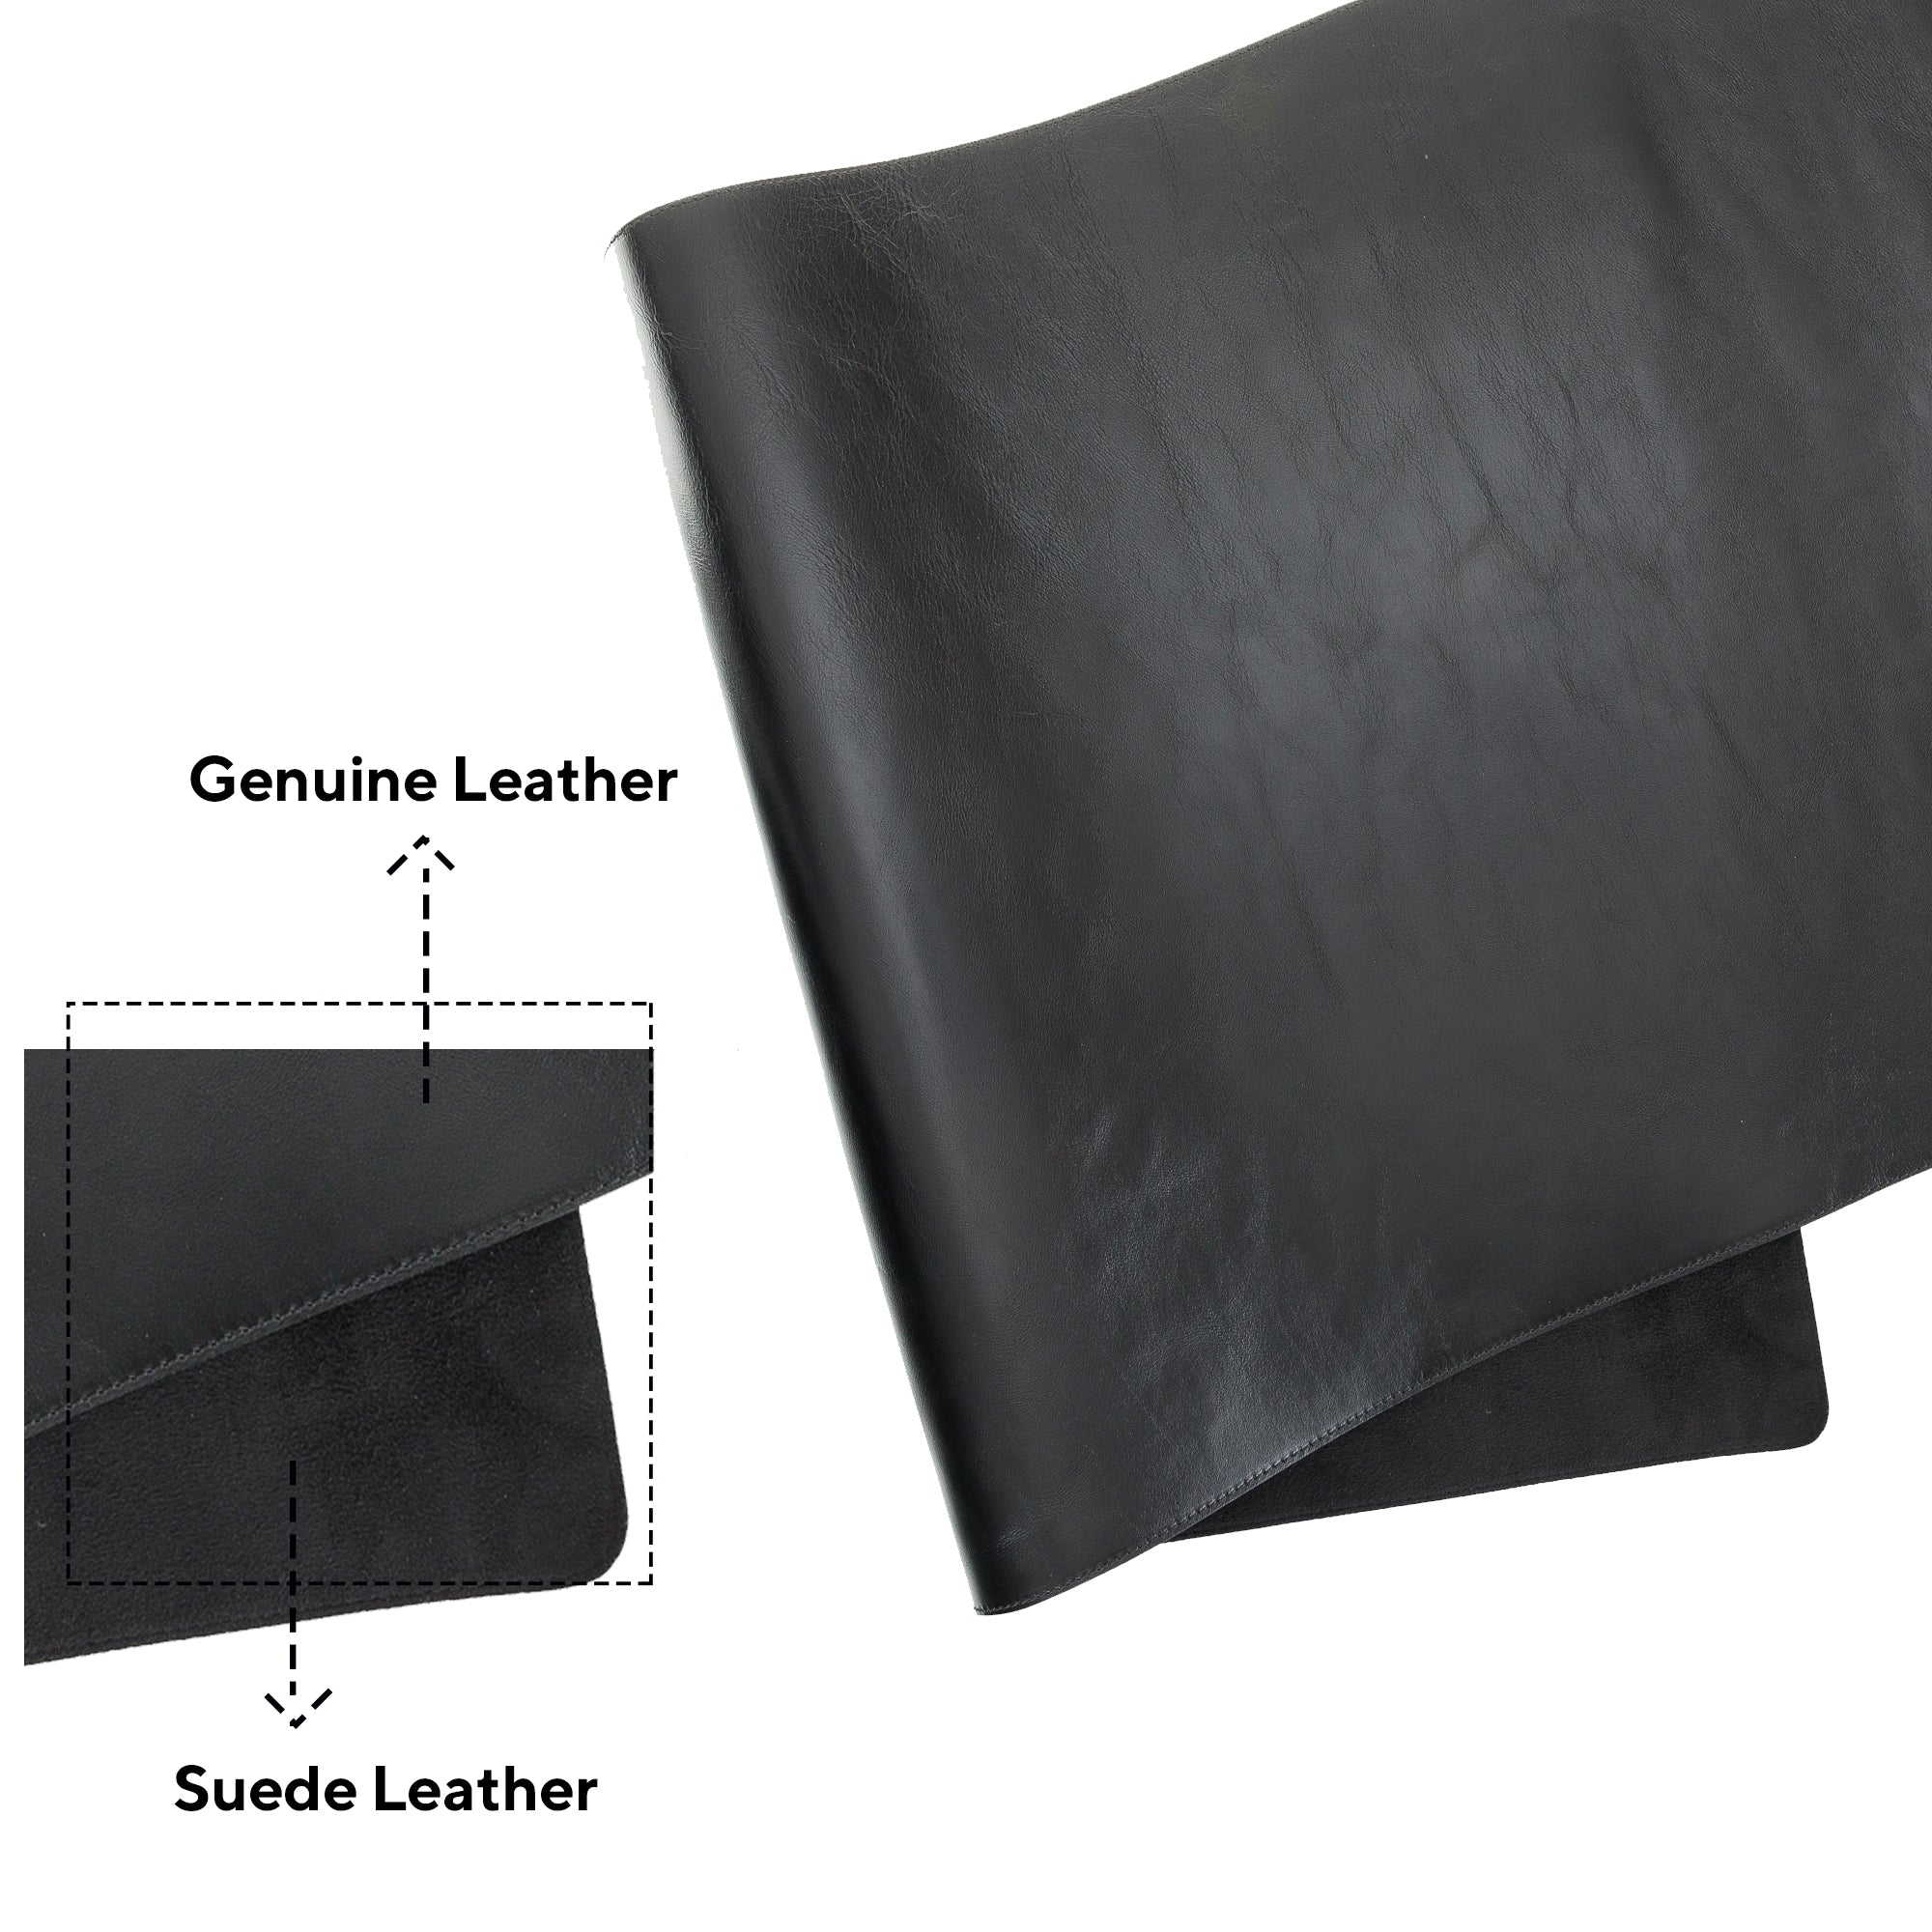 DelfiCase Genuine Leather Deskmat, Computer Pad, Office Desk Pad (Black) 3